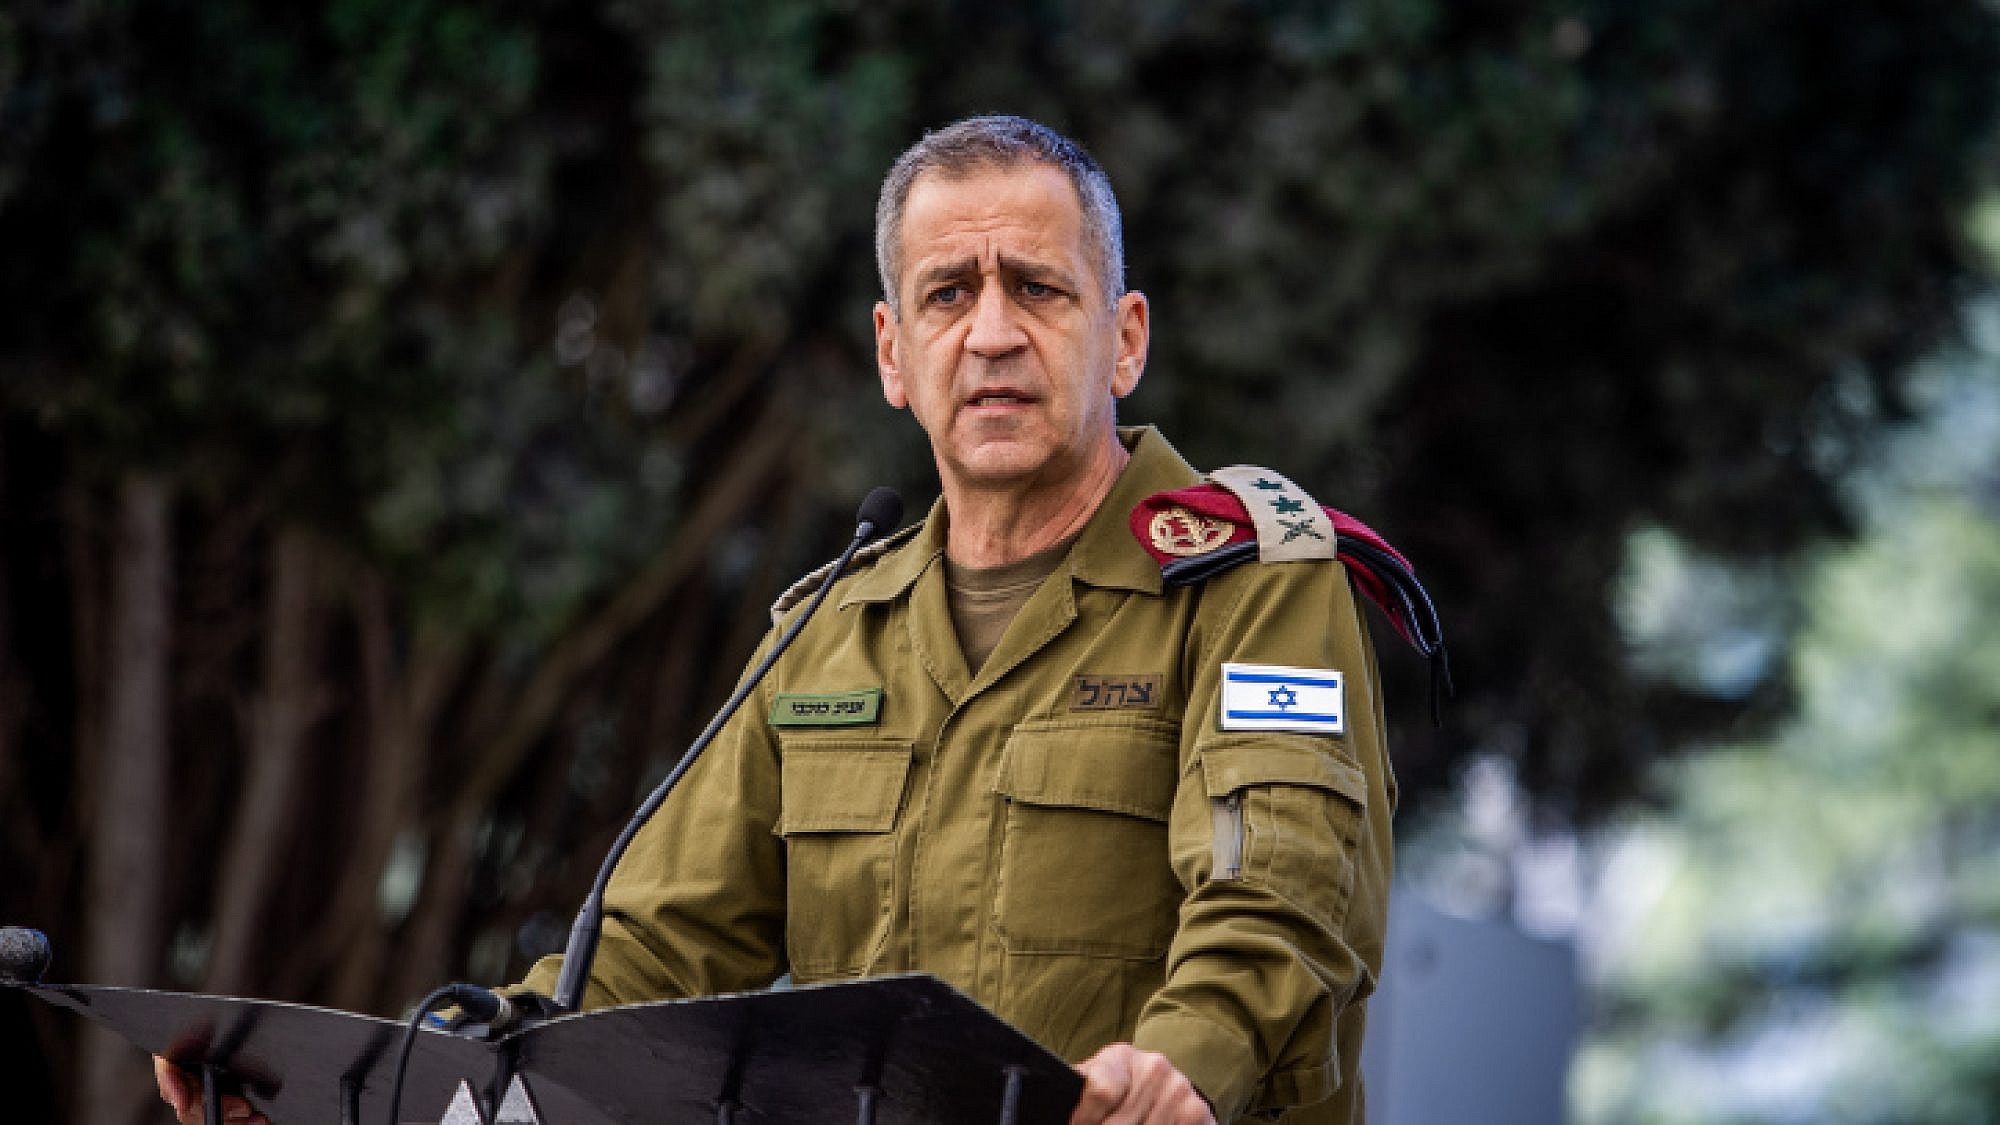 IDF Chief of Staff Lt. Gen. Aviv Kochavi attends a ceremony of the Aharai! Youth Program, at Mount Herzl in Jerusalem on June 17, 2022. Photo by Flash90.